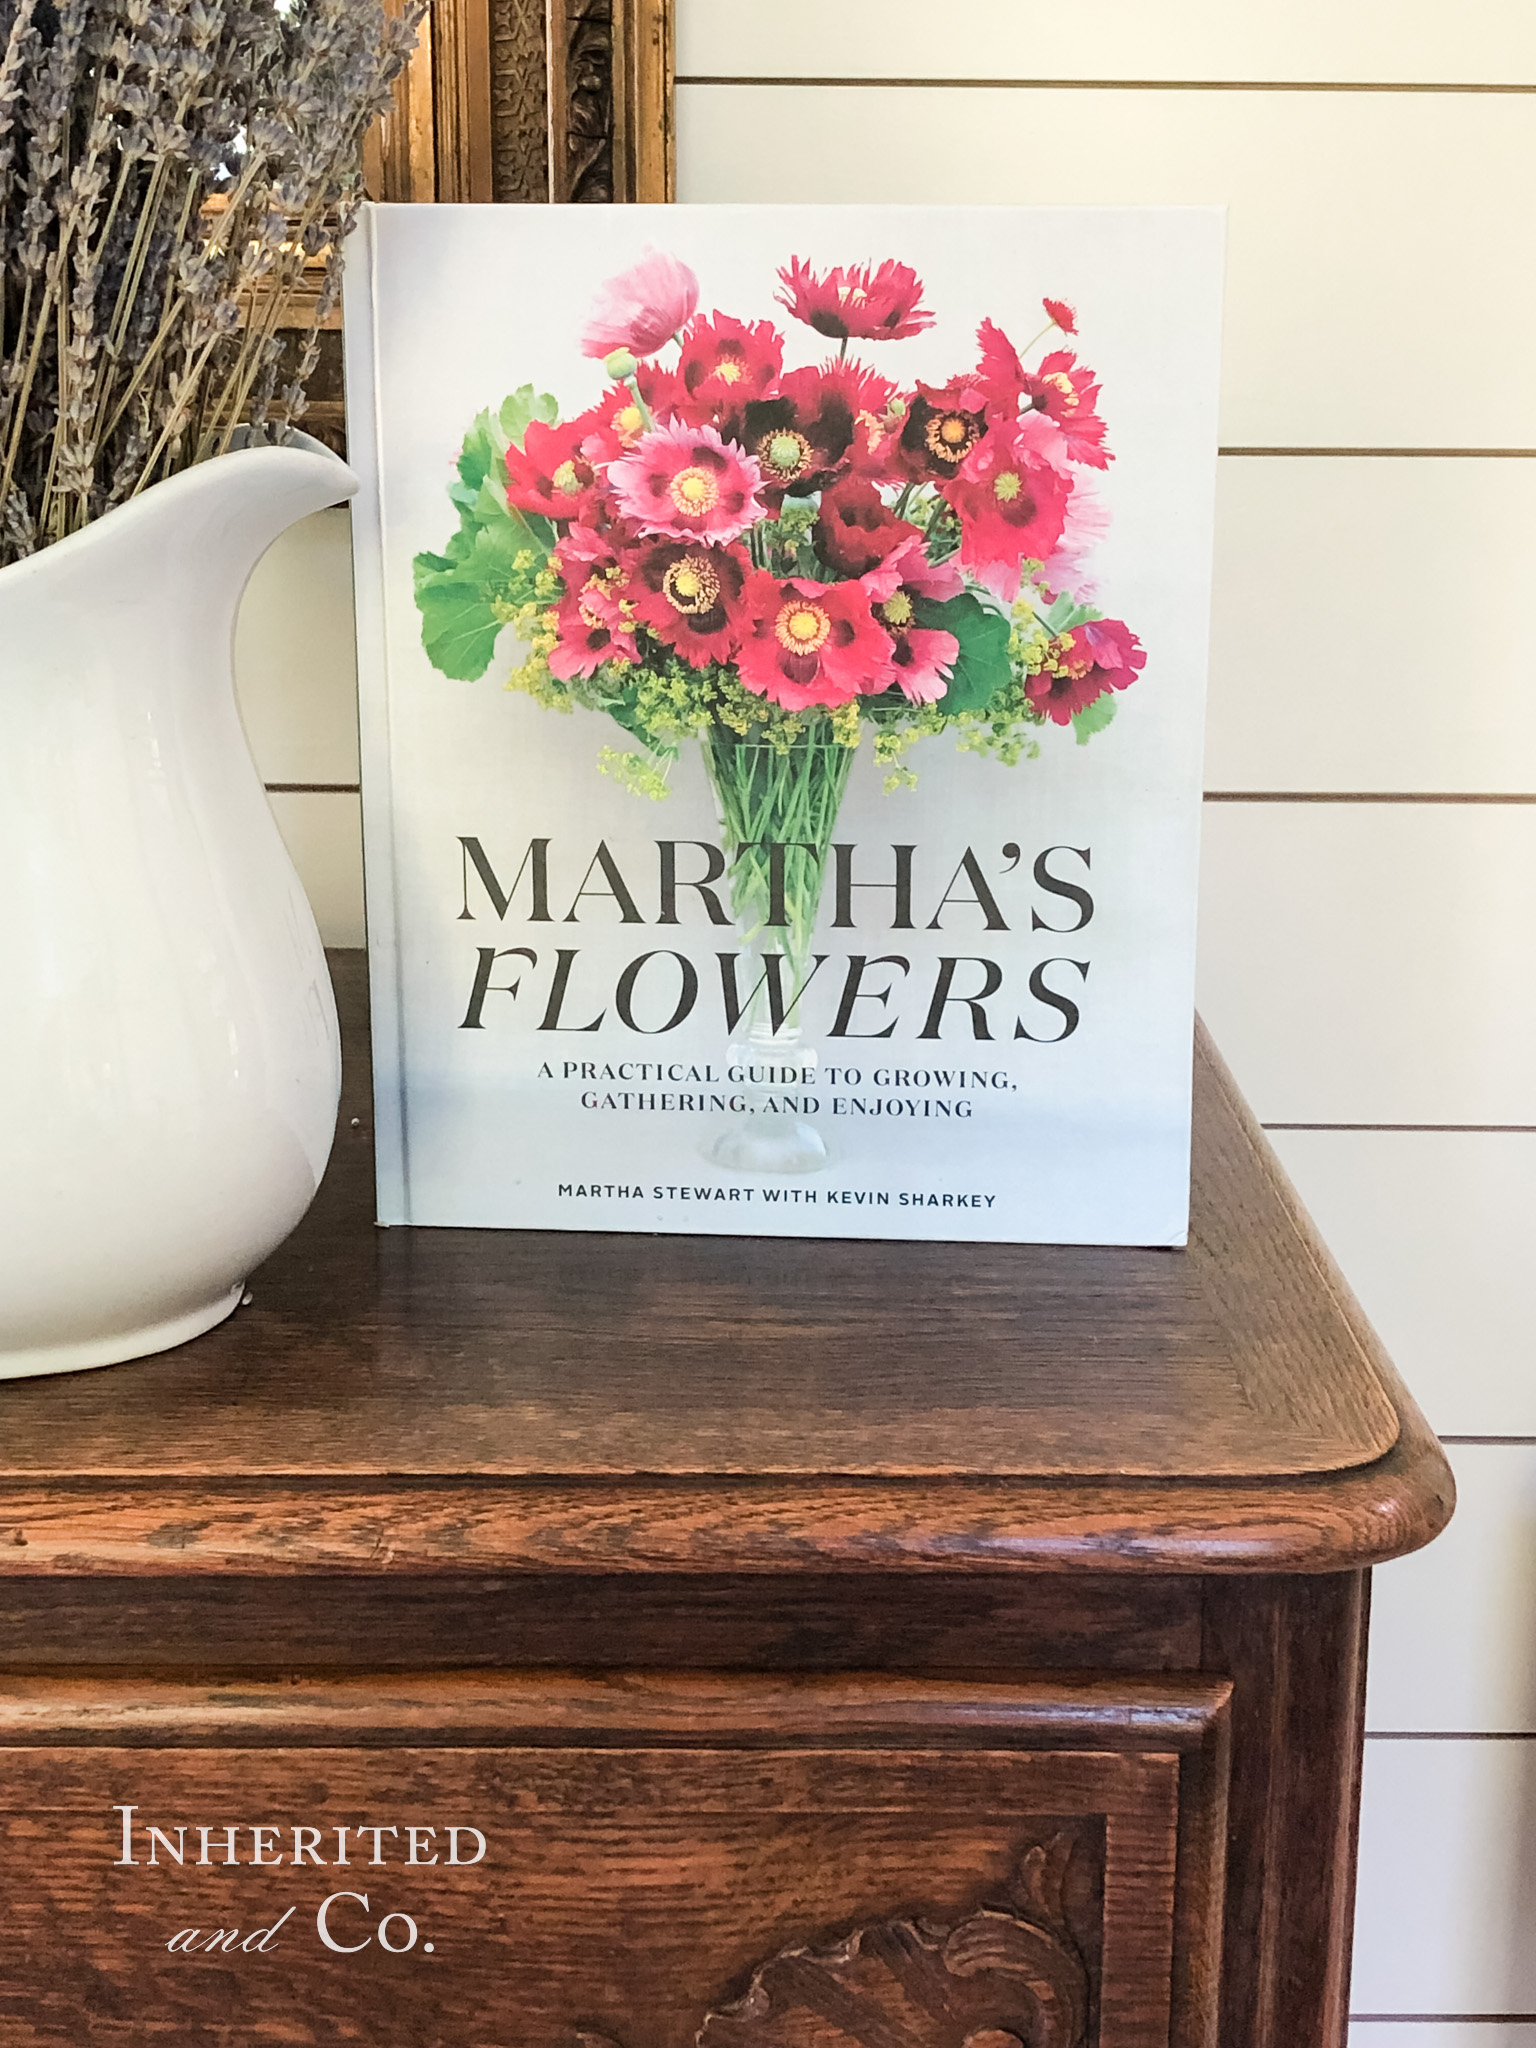 Martha's Flowers book by Martha Stewart